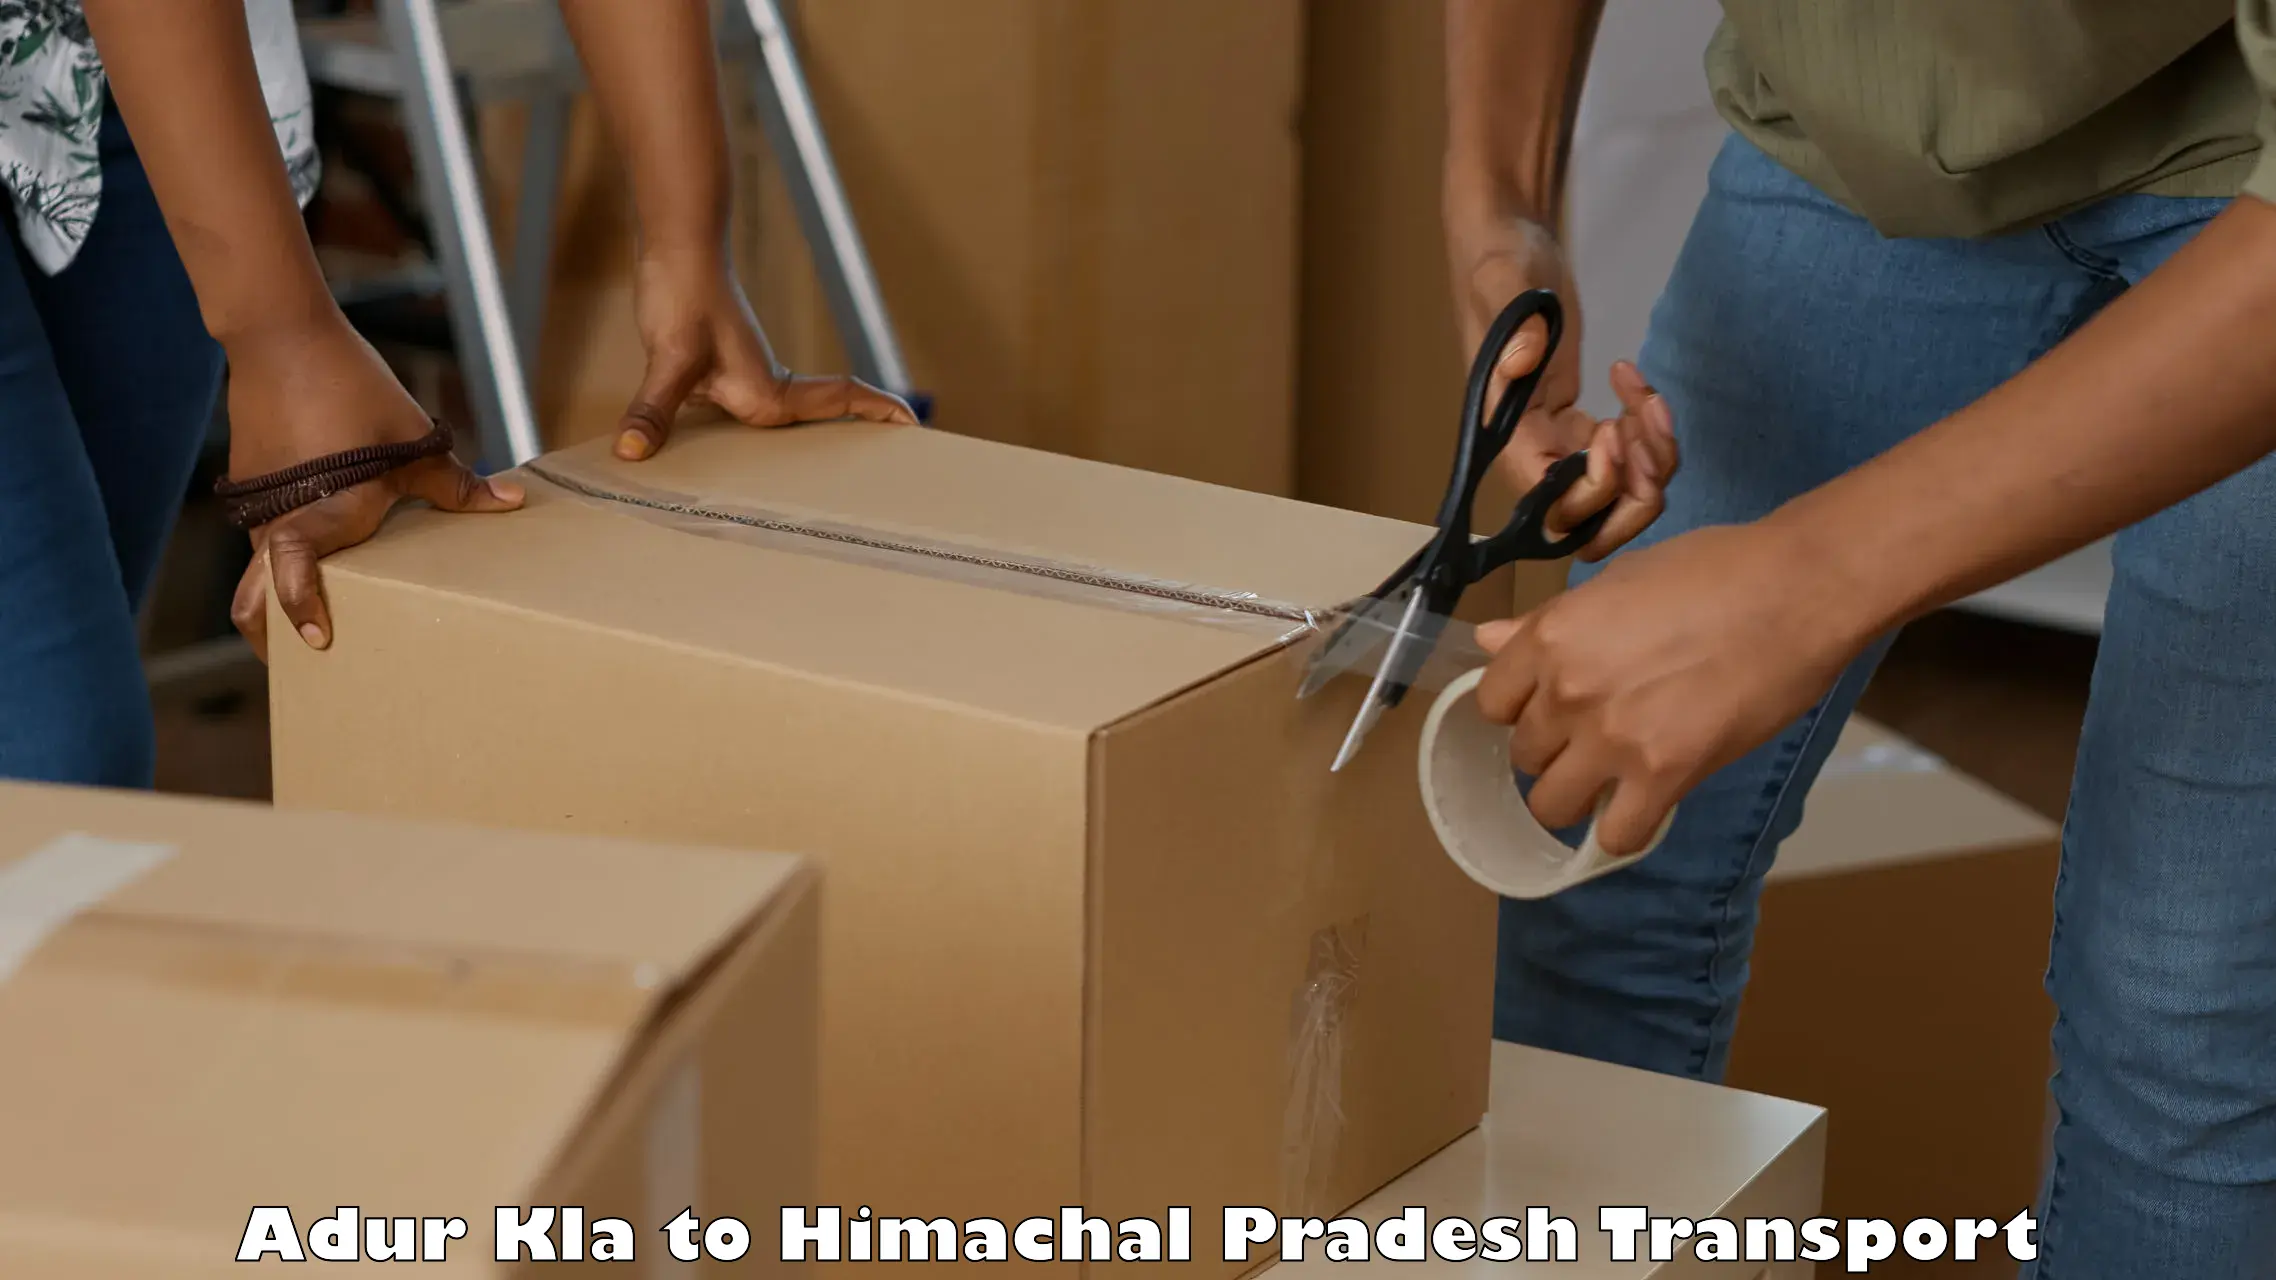 Shipping partner Adur Kla to Himachal Pradesh